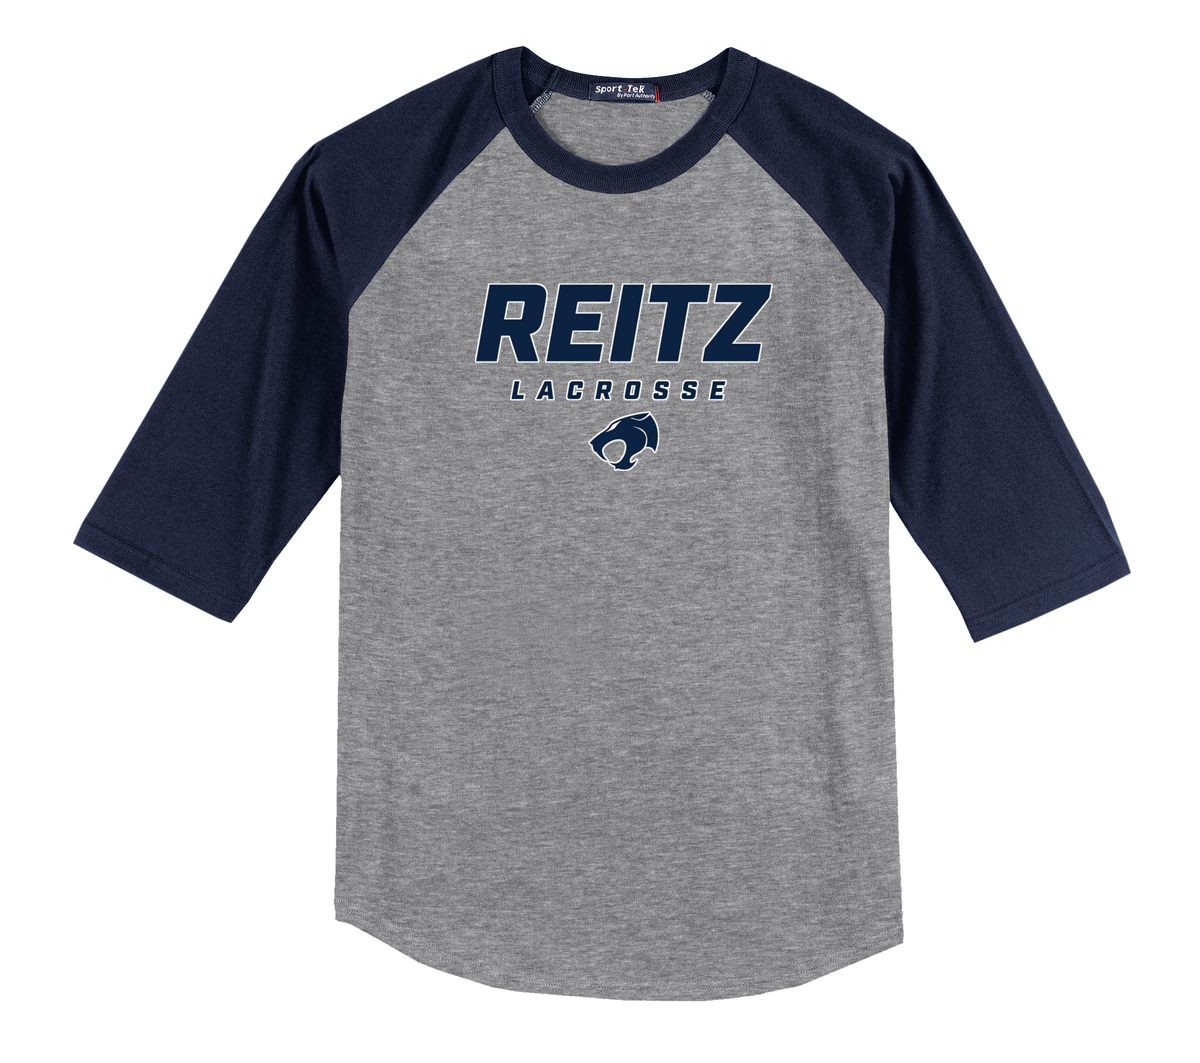 Reitz Lacrosse Heather Grey/Navy 3/4 Sleeve Shirt